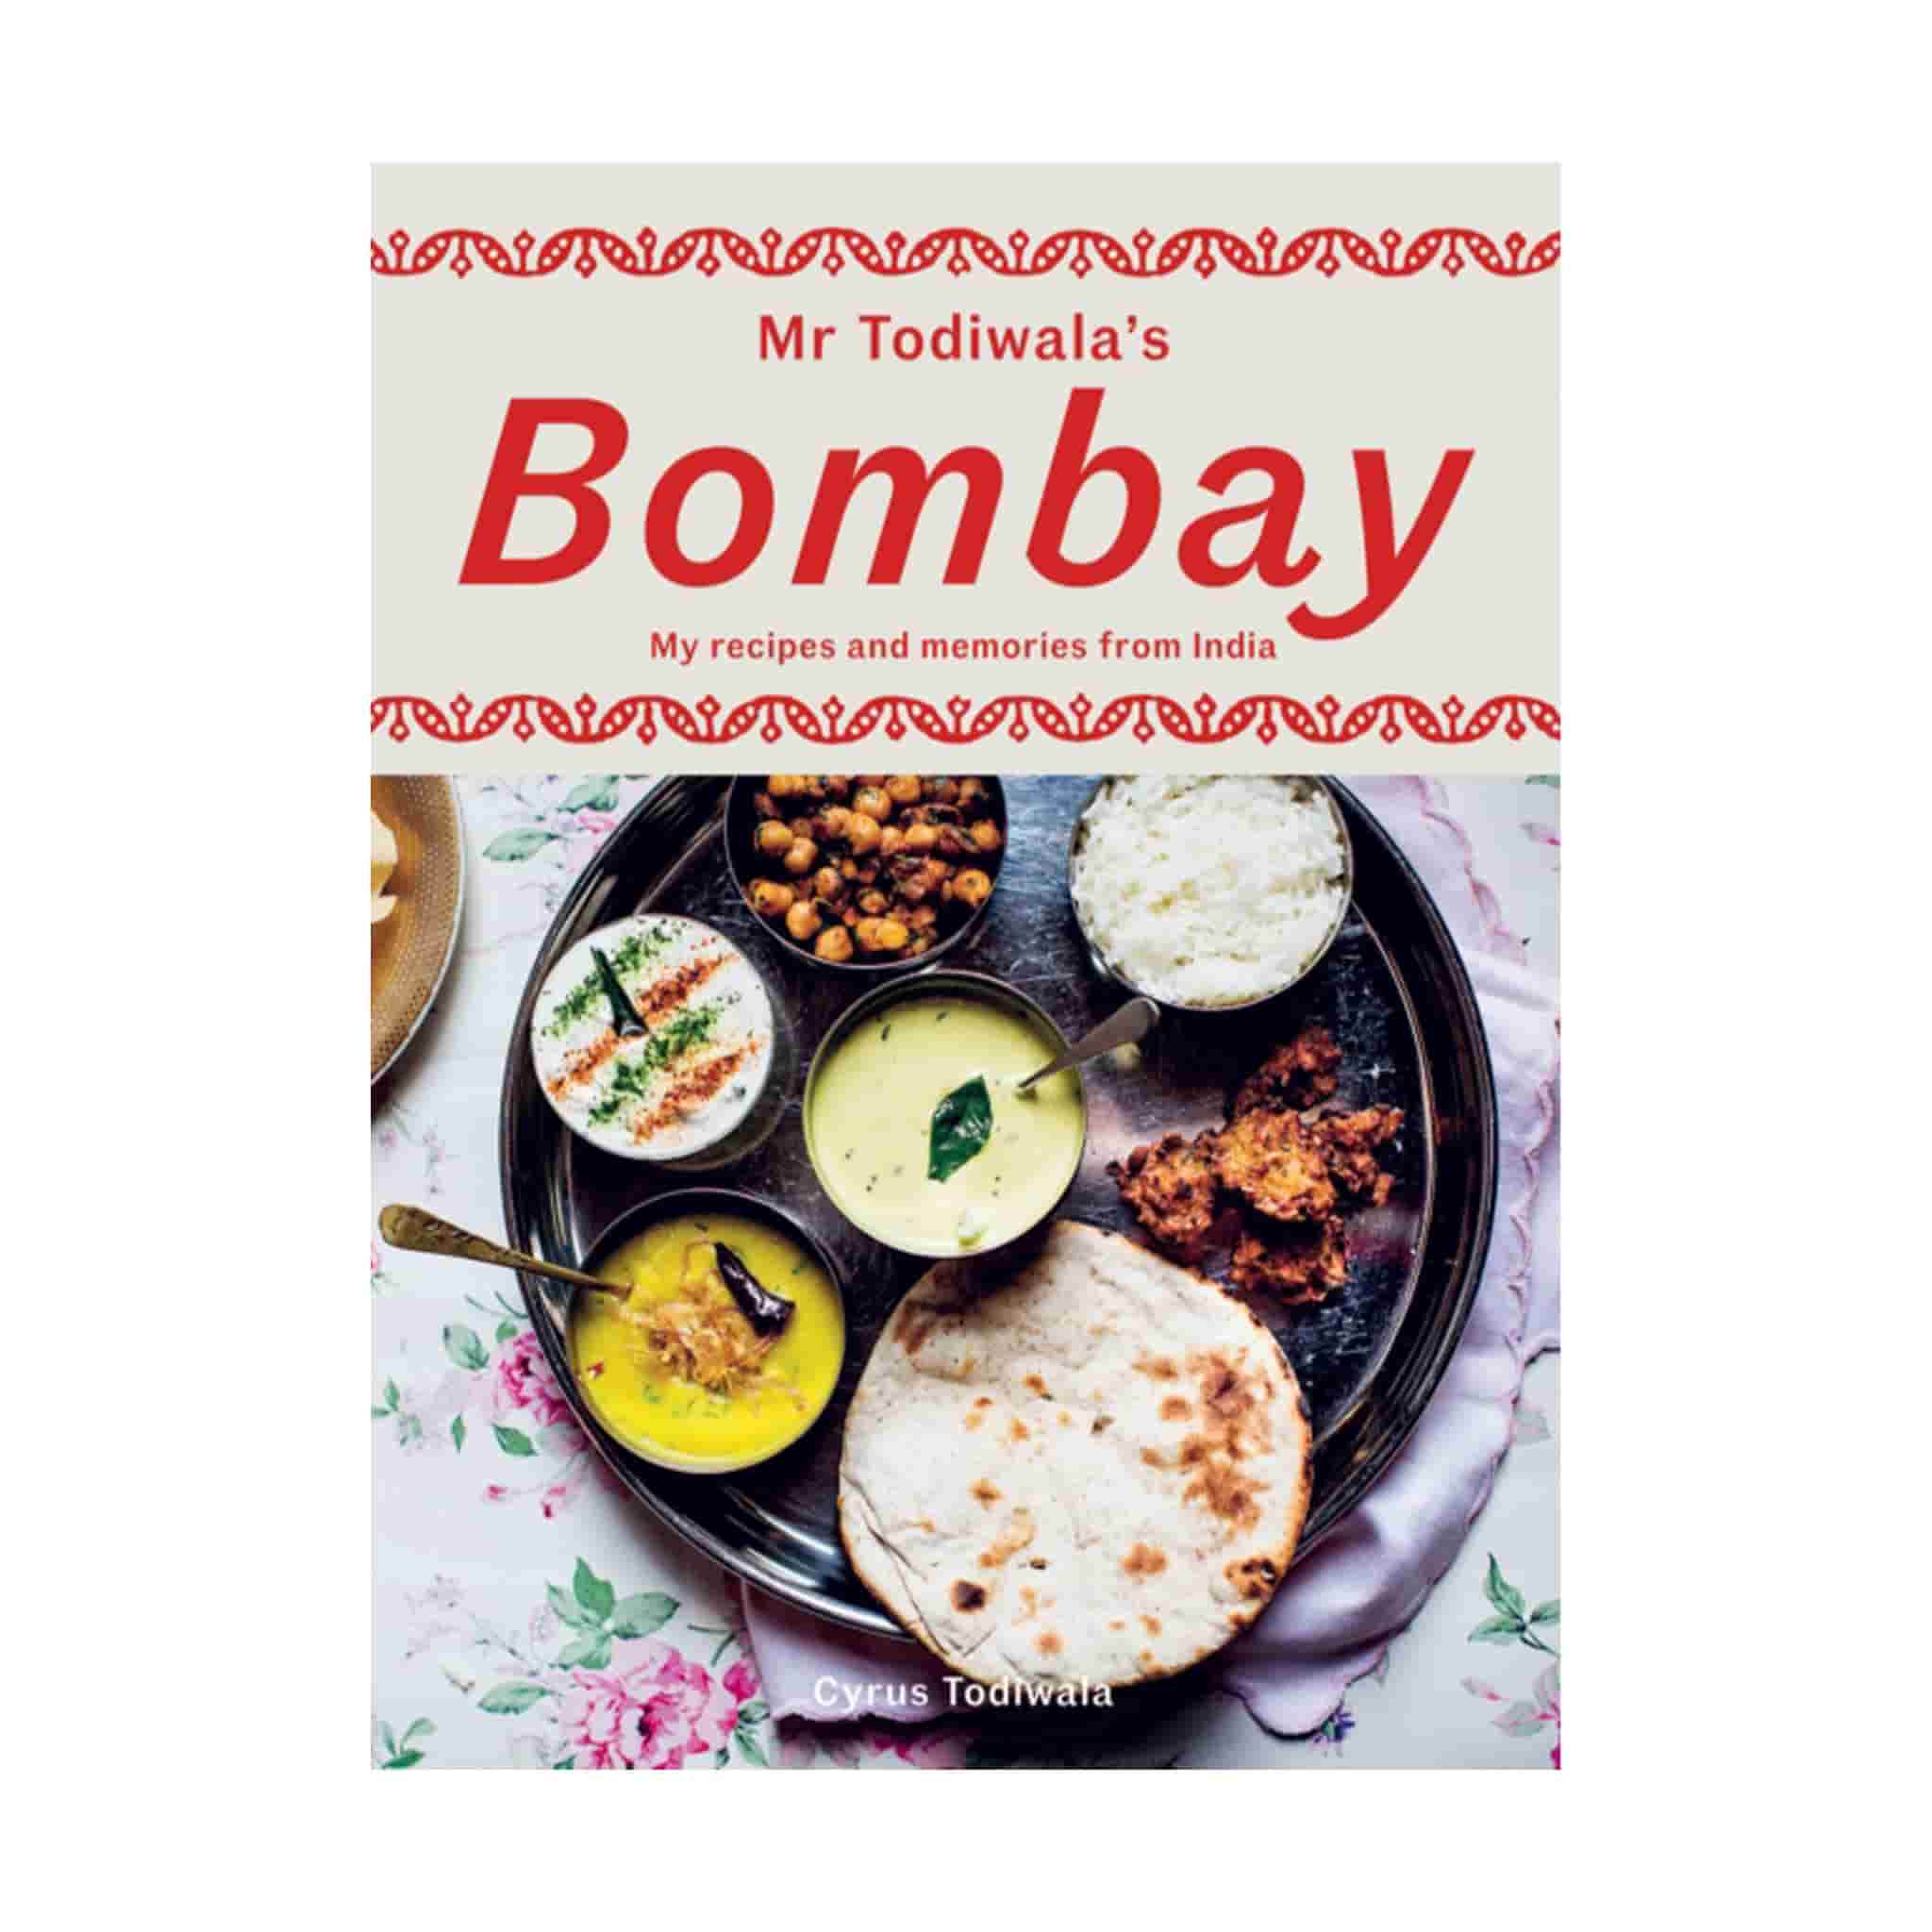 Mr Todiwala's Bombay, by Cyrus Todiwala